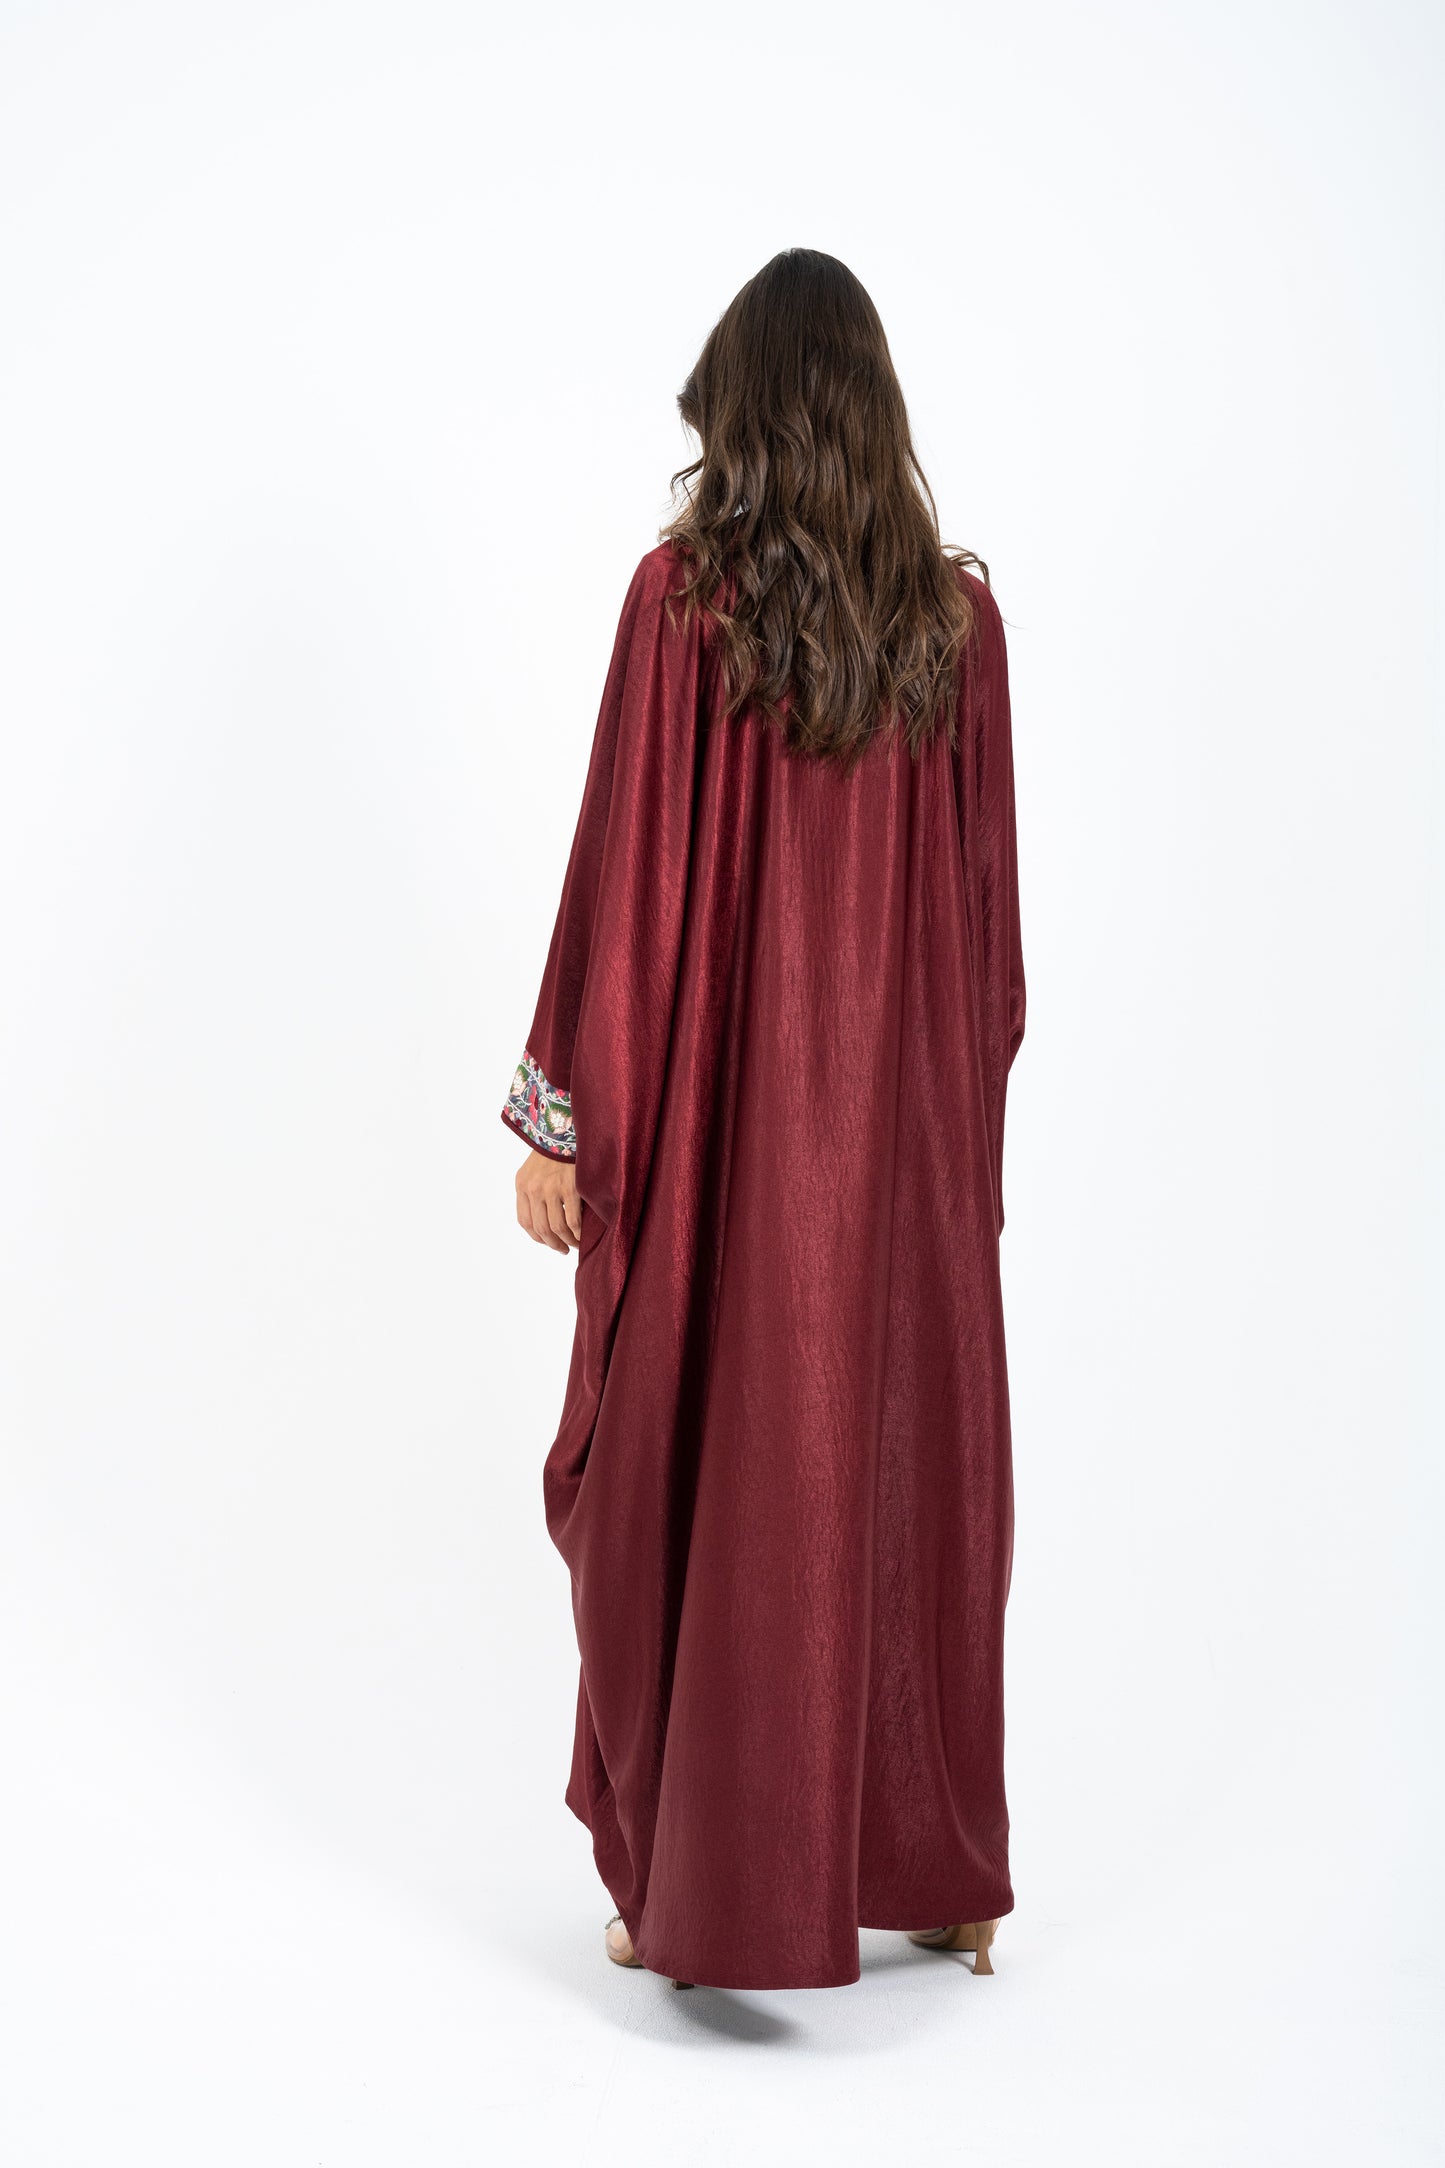 Maroon lace abaya